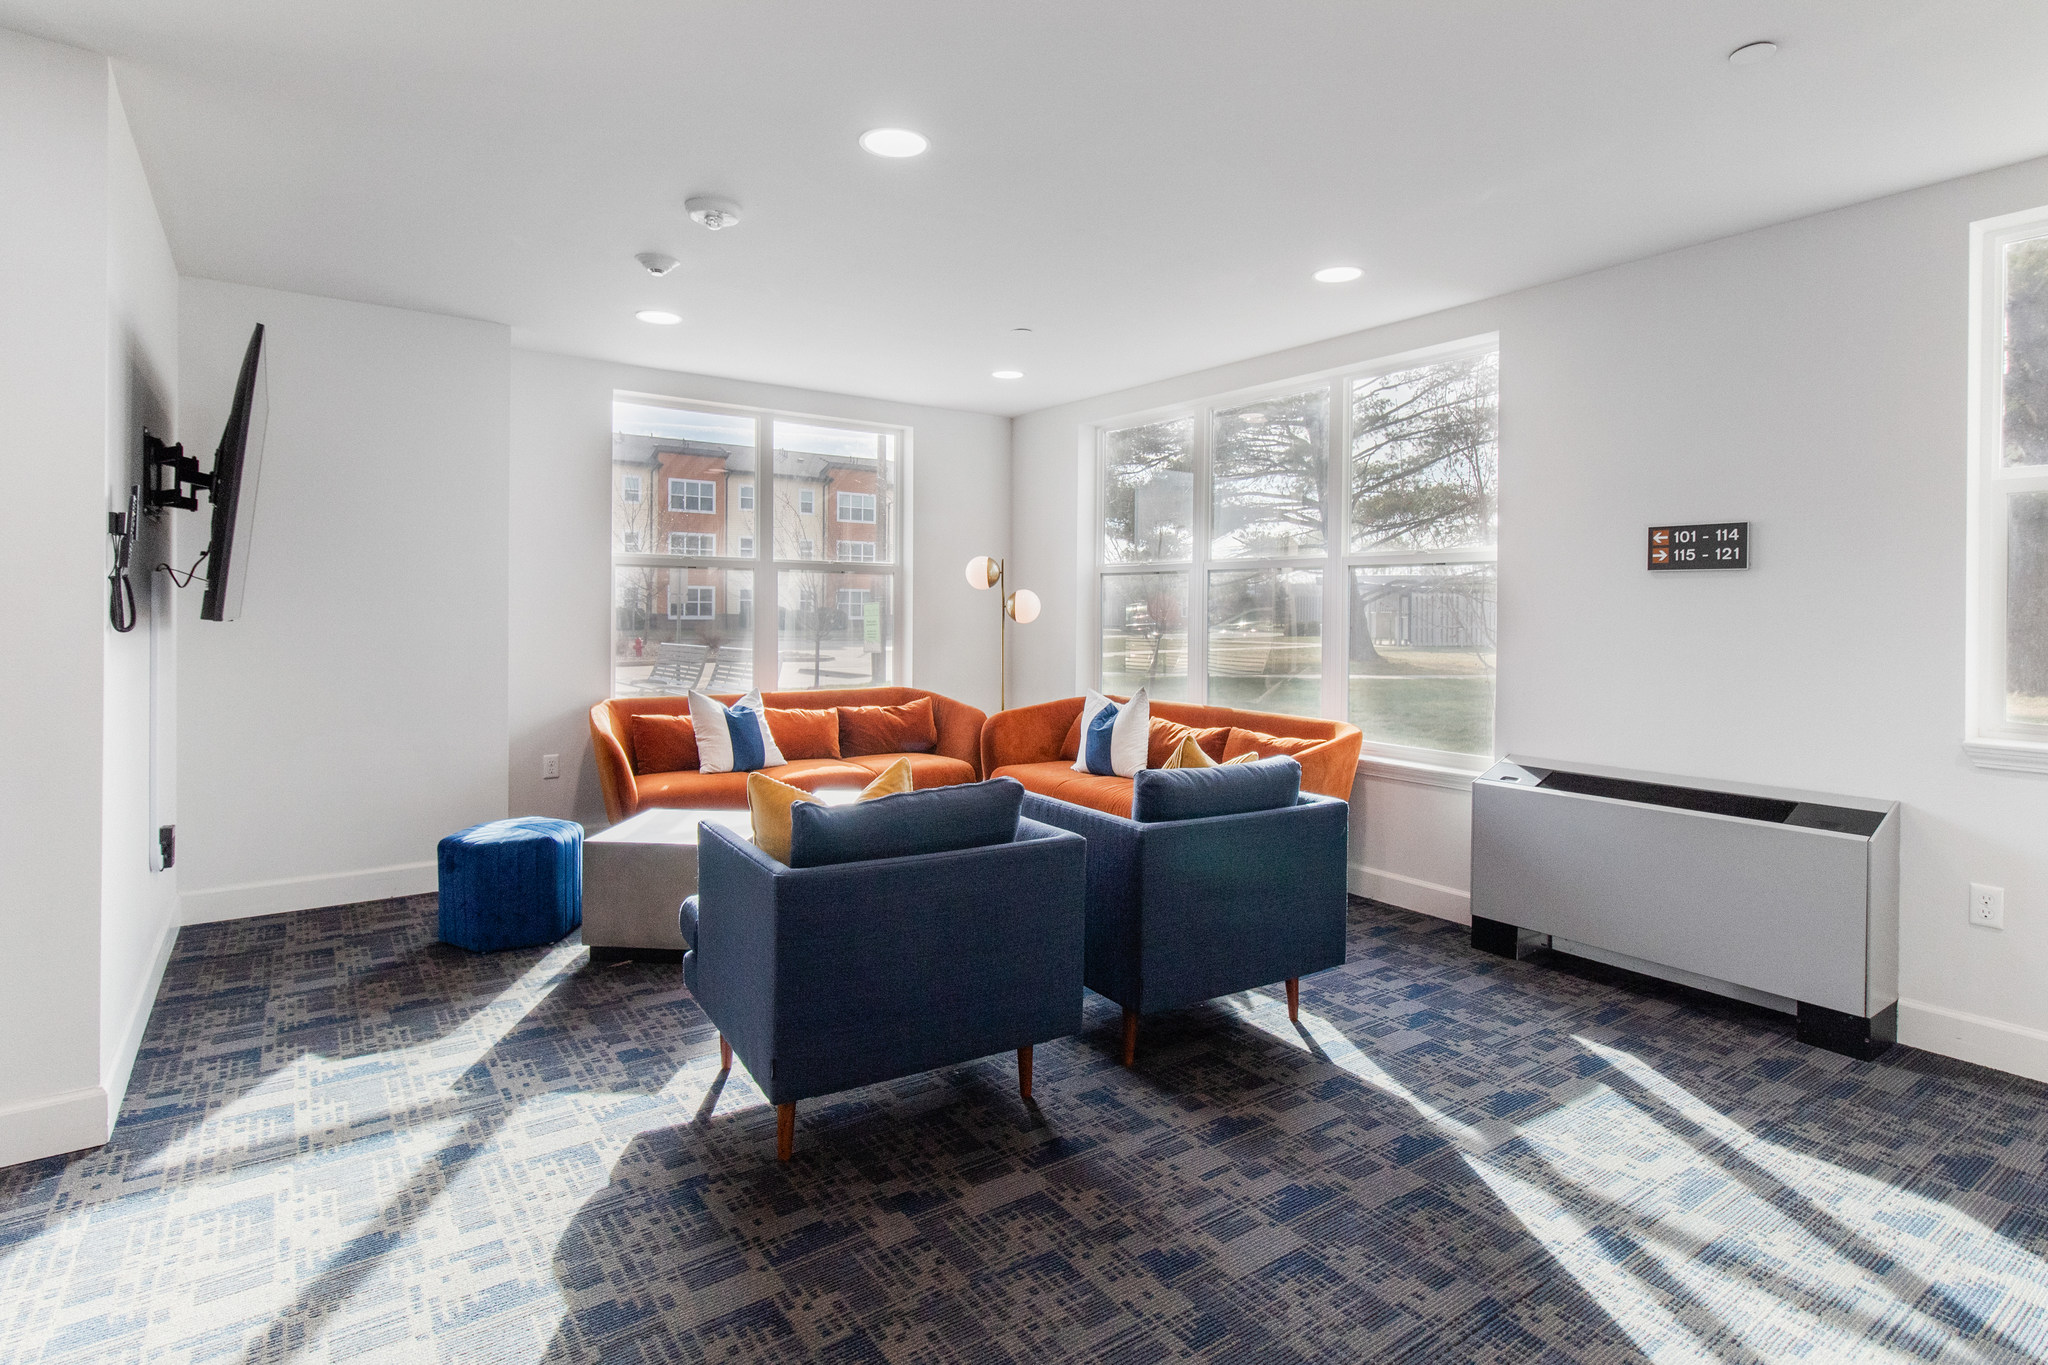 aspire west campus student housing interior design by mood